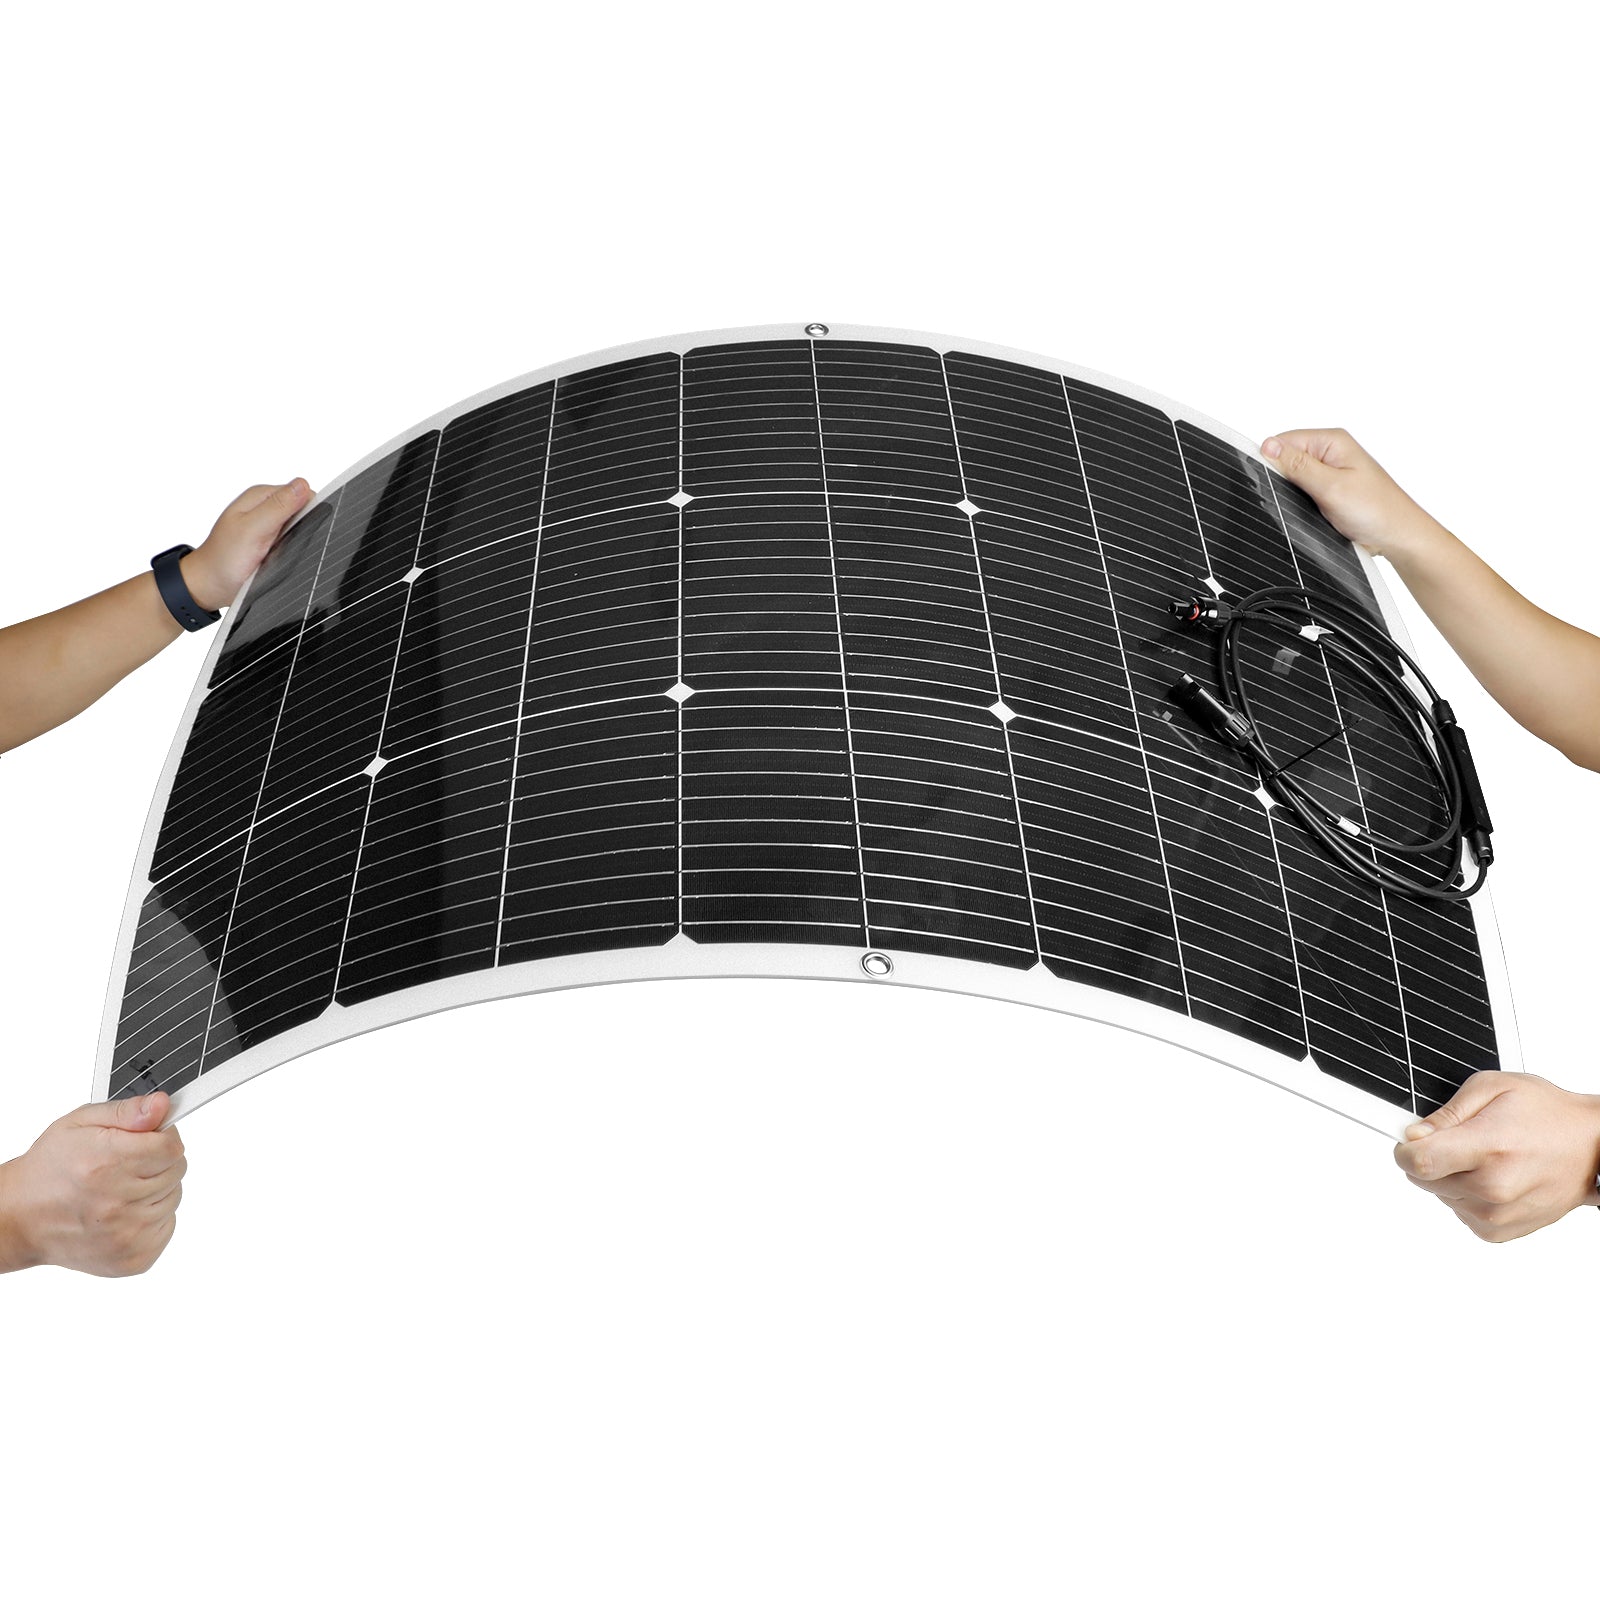 Panel solar monocristalino flexible de 200W 